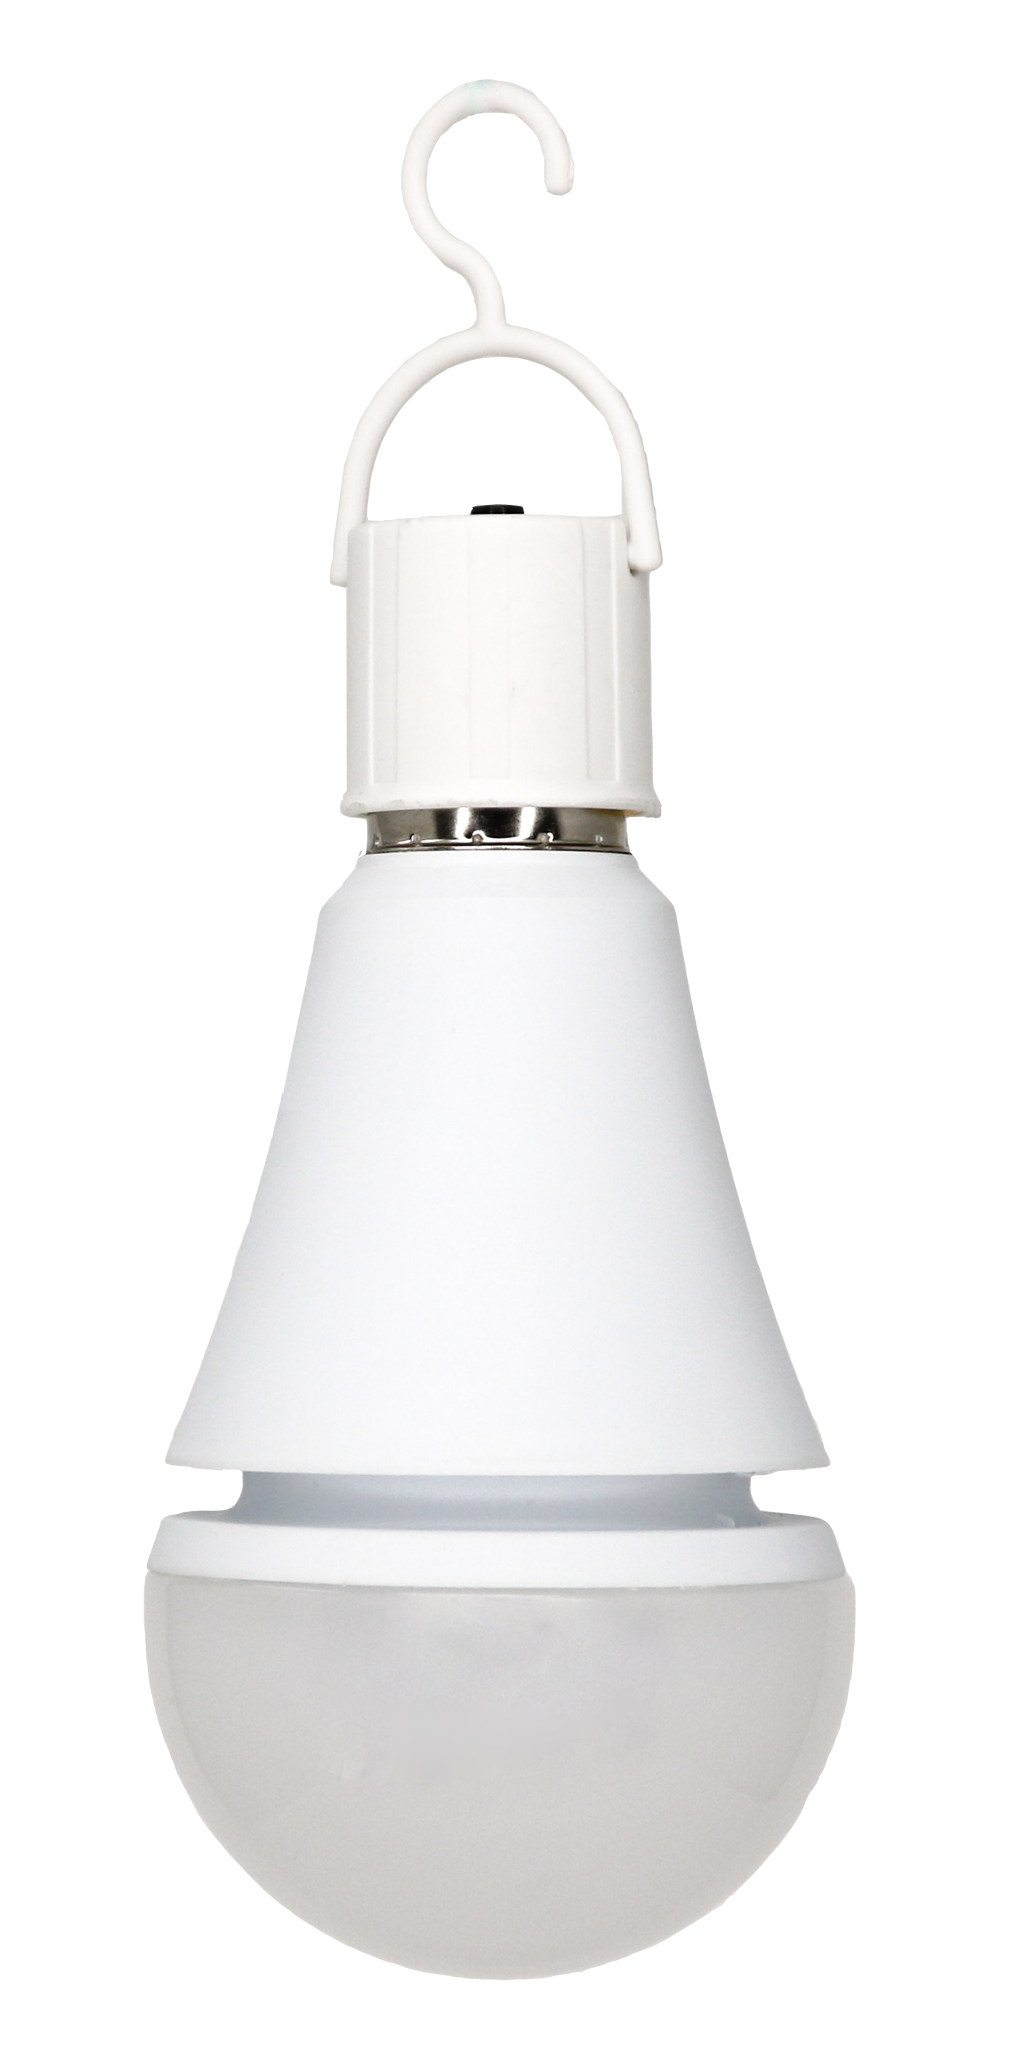 ESKY Reverse Lamp – Portable Led Lamp – Rechargeable Battery Lamp